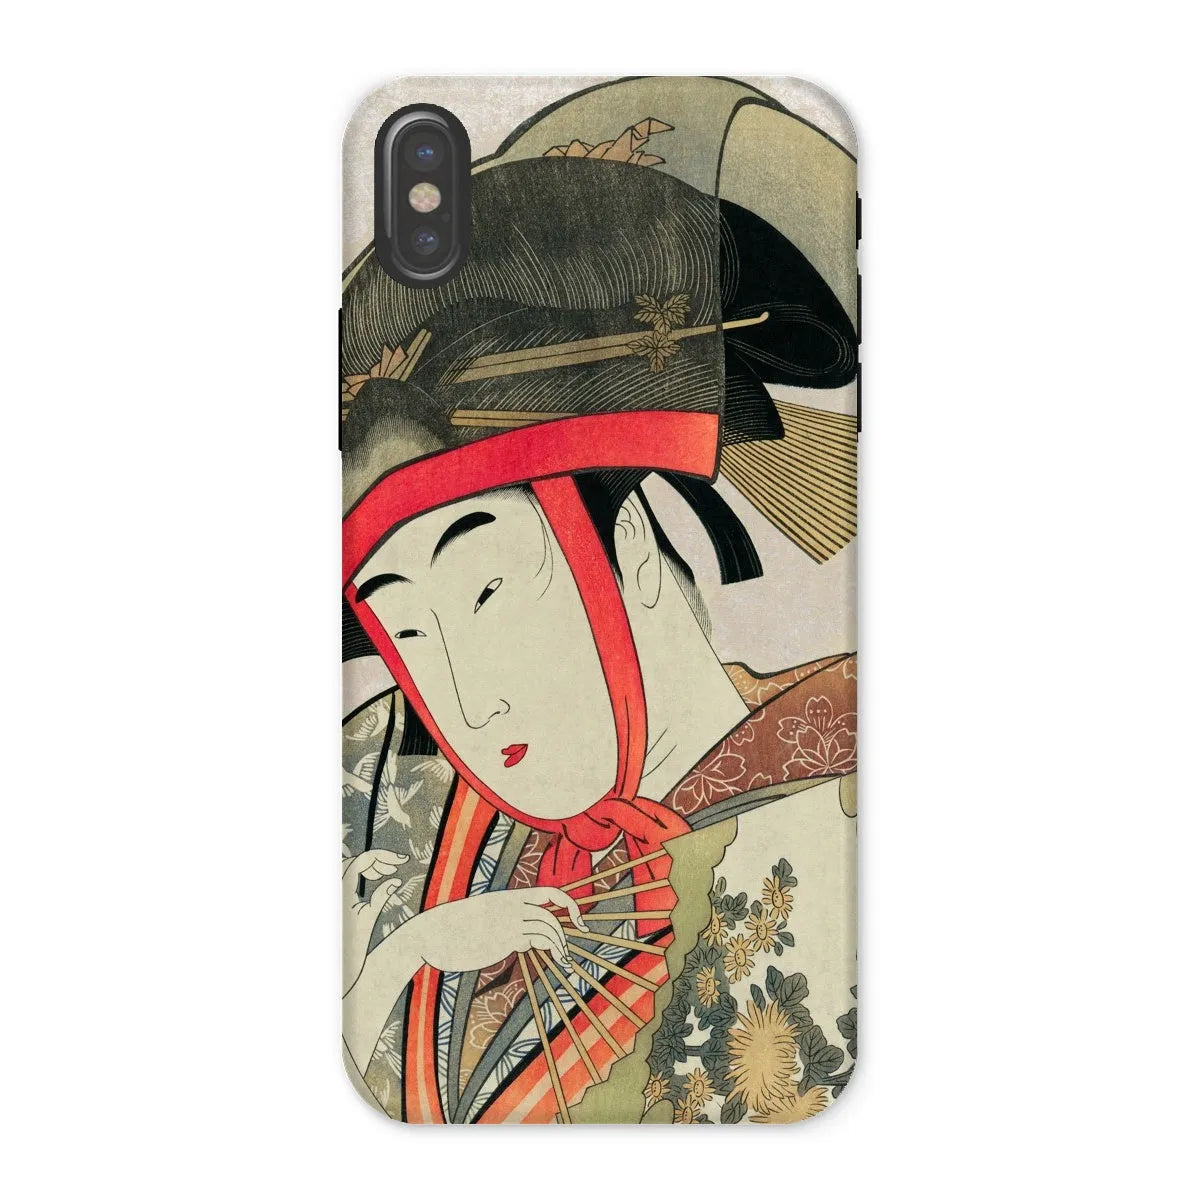 Yoshiwara Suzume - Japanese Ukiyo-e Art Phone Case - Utamaro - Iphone x / Matte - Mobile Phone Cases - Aesthetic Art